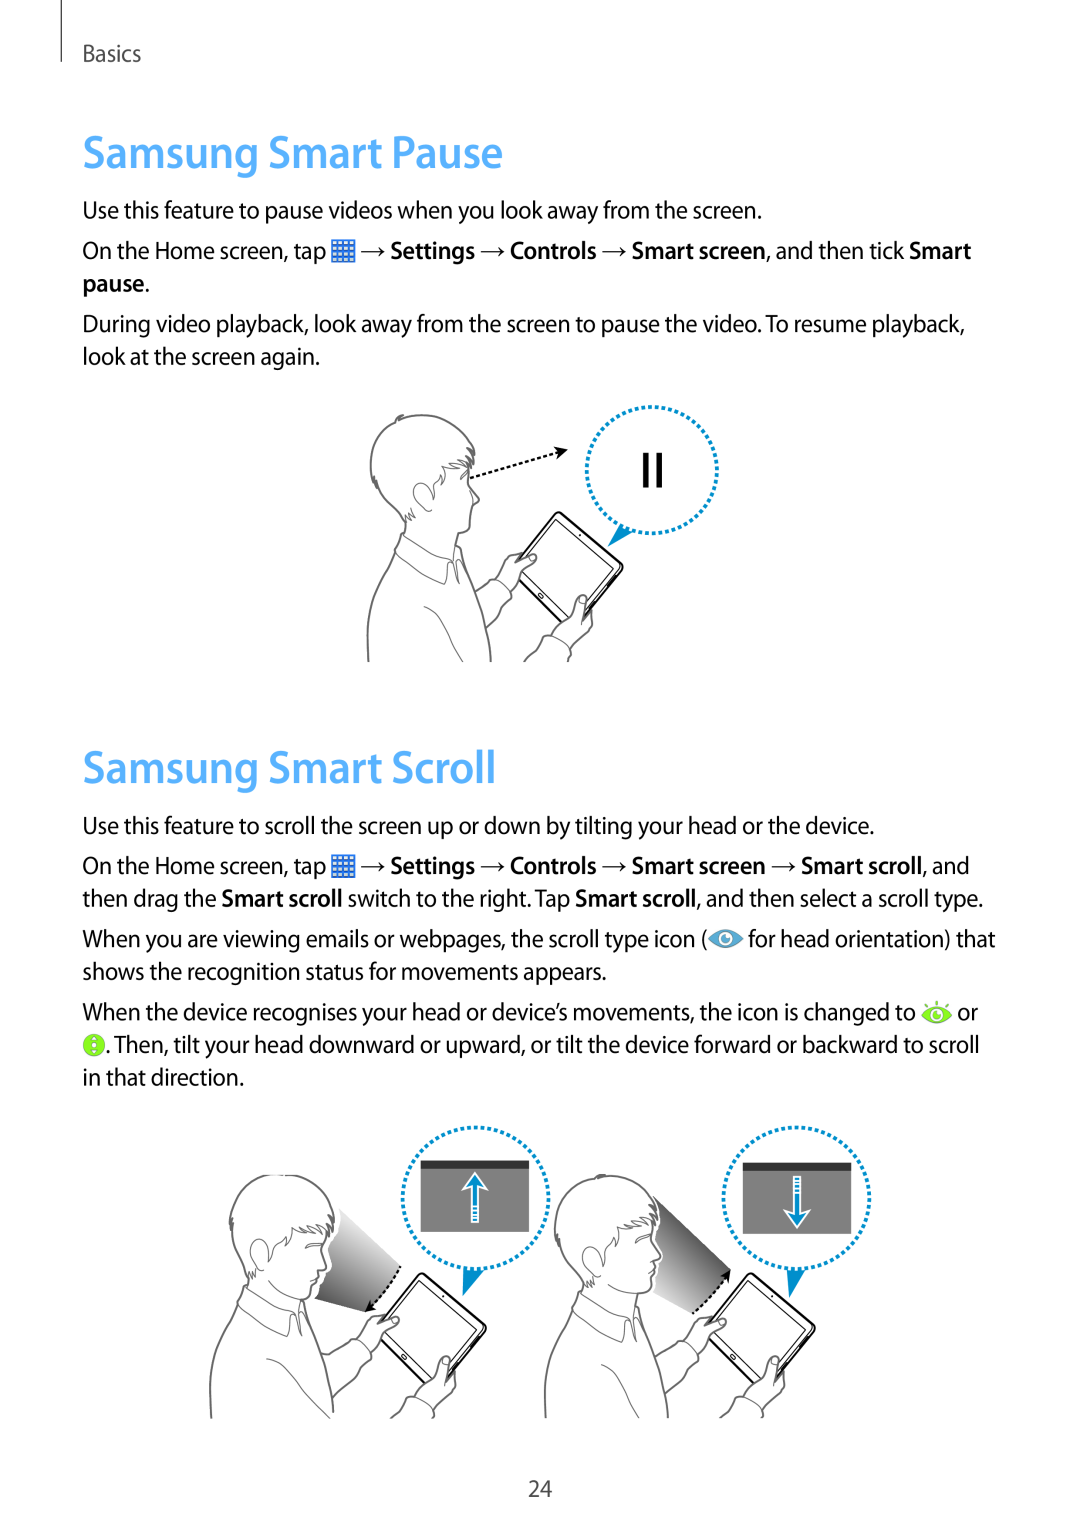 Samsung SM-P6000ZWABGL, SM-P6000ZWAXEO, SM-P6000ZKEDBT, SM-P6000ZKAEUR Samsung Smart Pause, Samsung Smart Scroll, Basics 